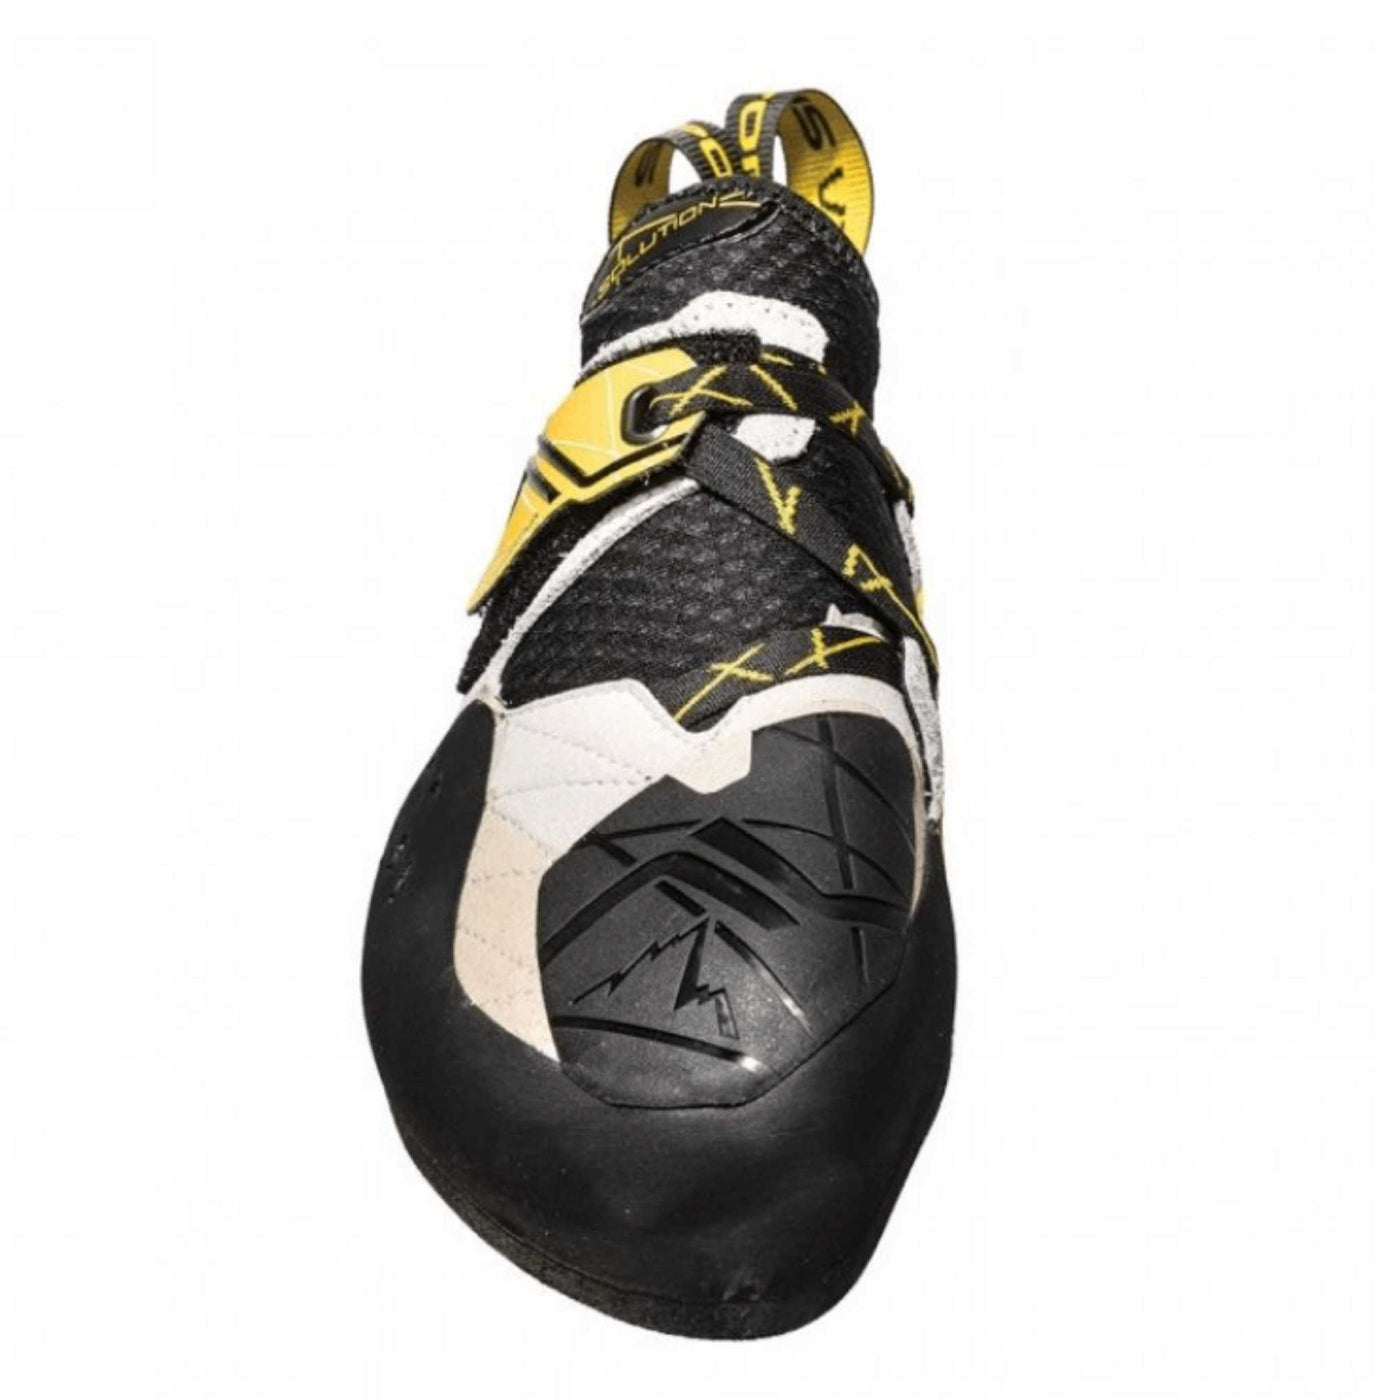 La Sportiva Solution | Climbing Shoes & Gear NZ | La Sportiva NZ | Further Faster Christchurch NZ #white-yellow